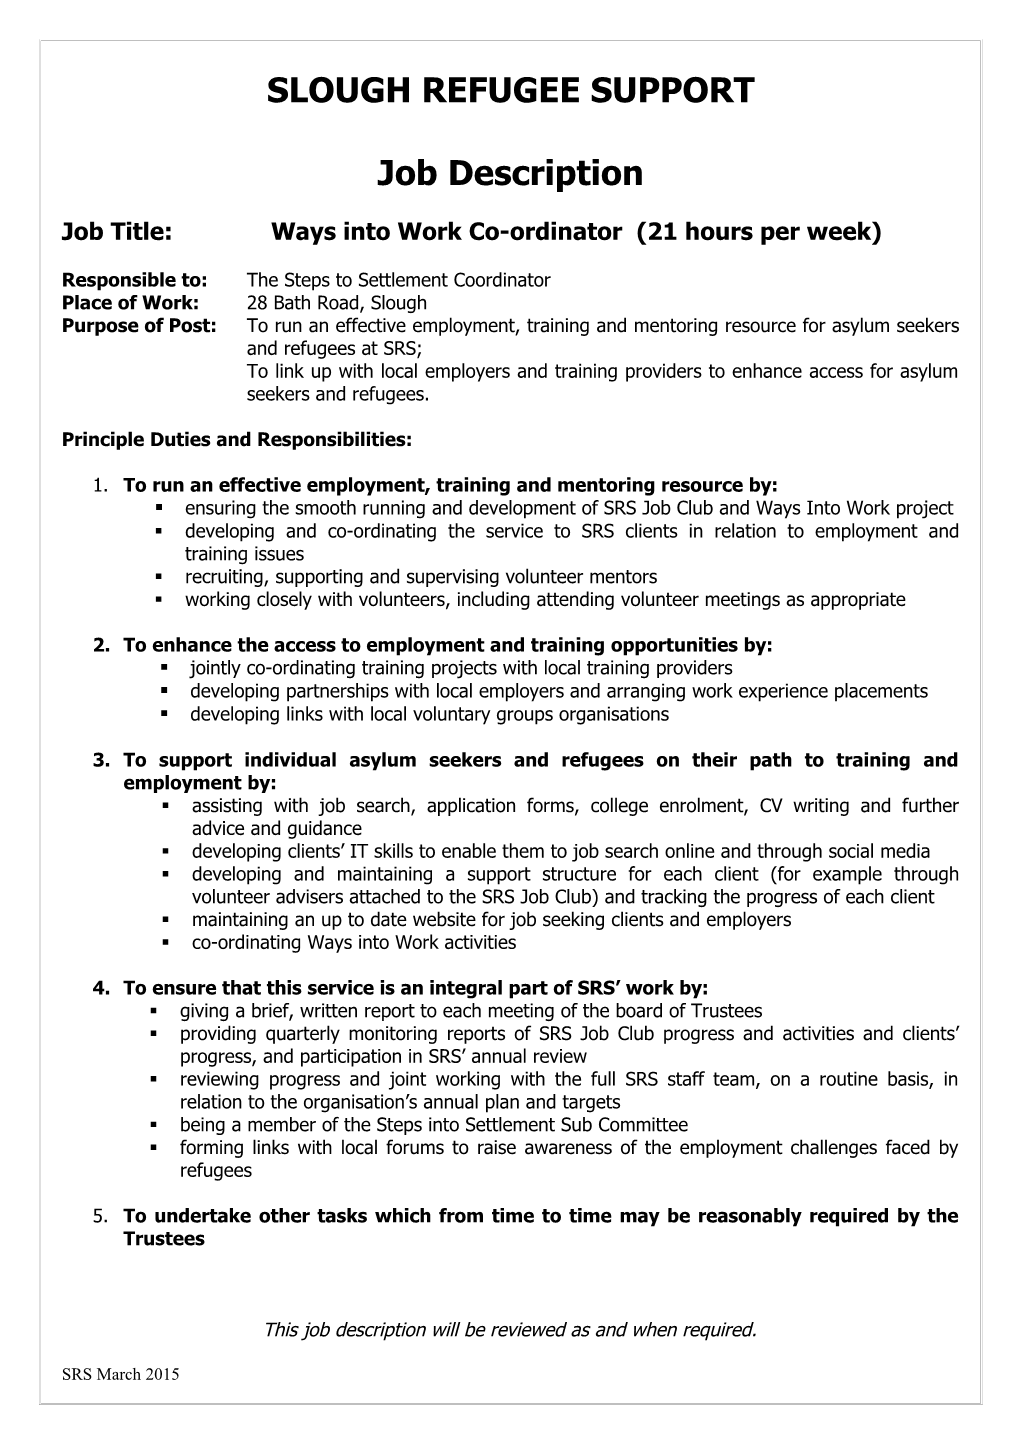 Job Title: Ways Into Work Co-Ordinator (21 Hours Per Week)